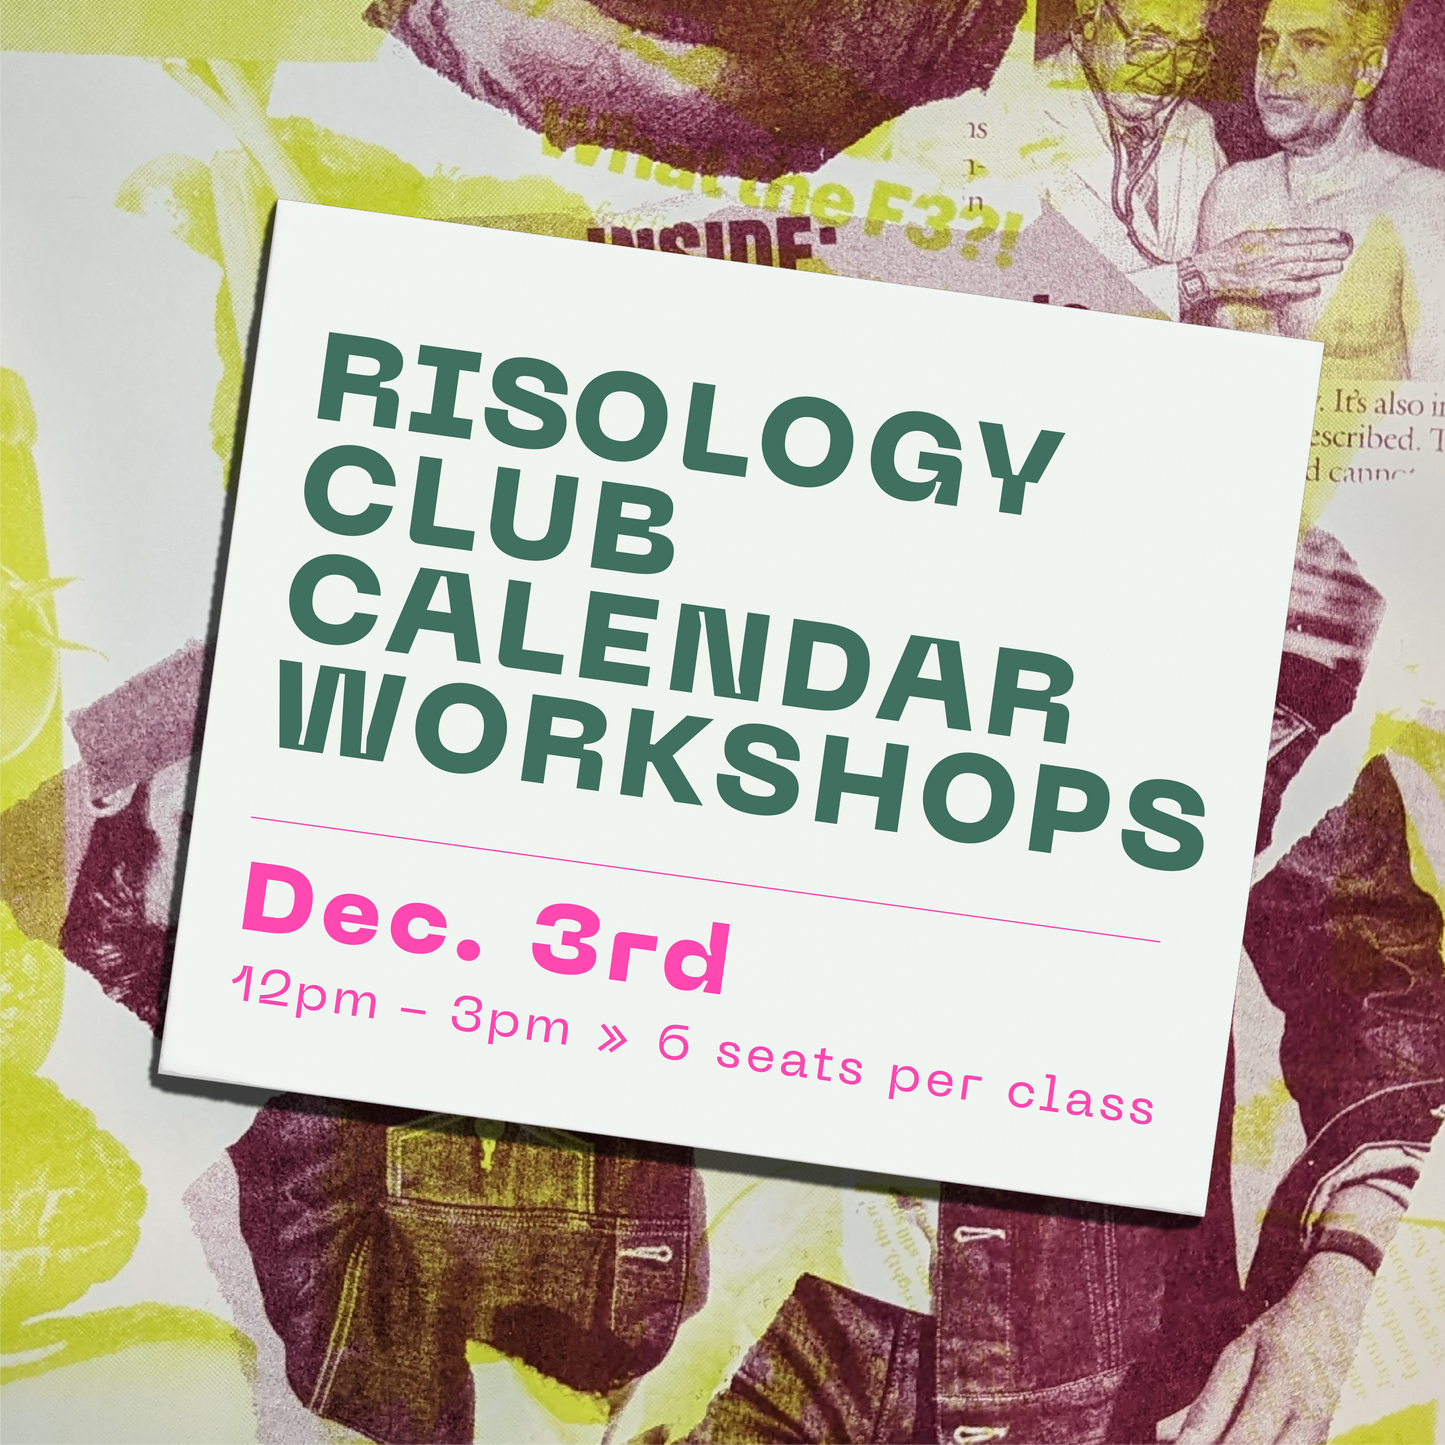 Risology Calendar Workshop — Sunday Dec 3rd